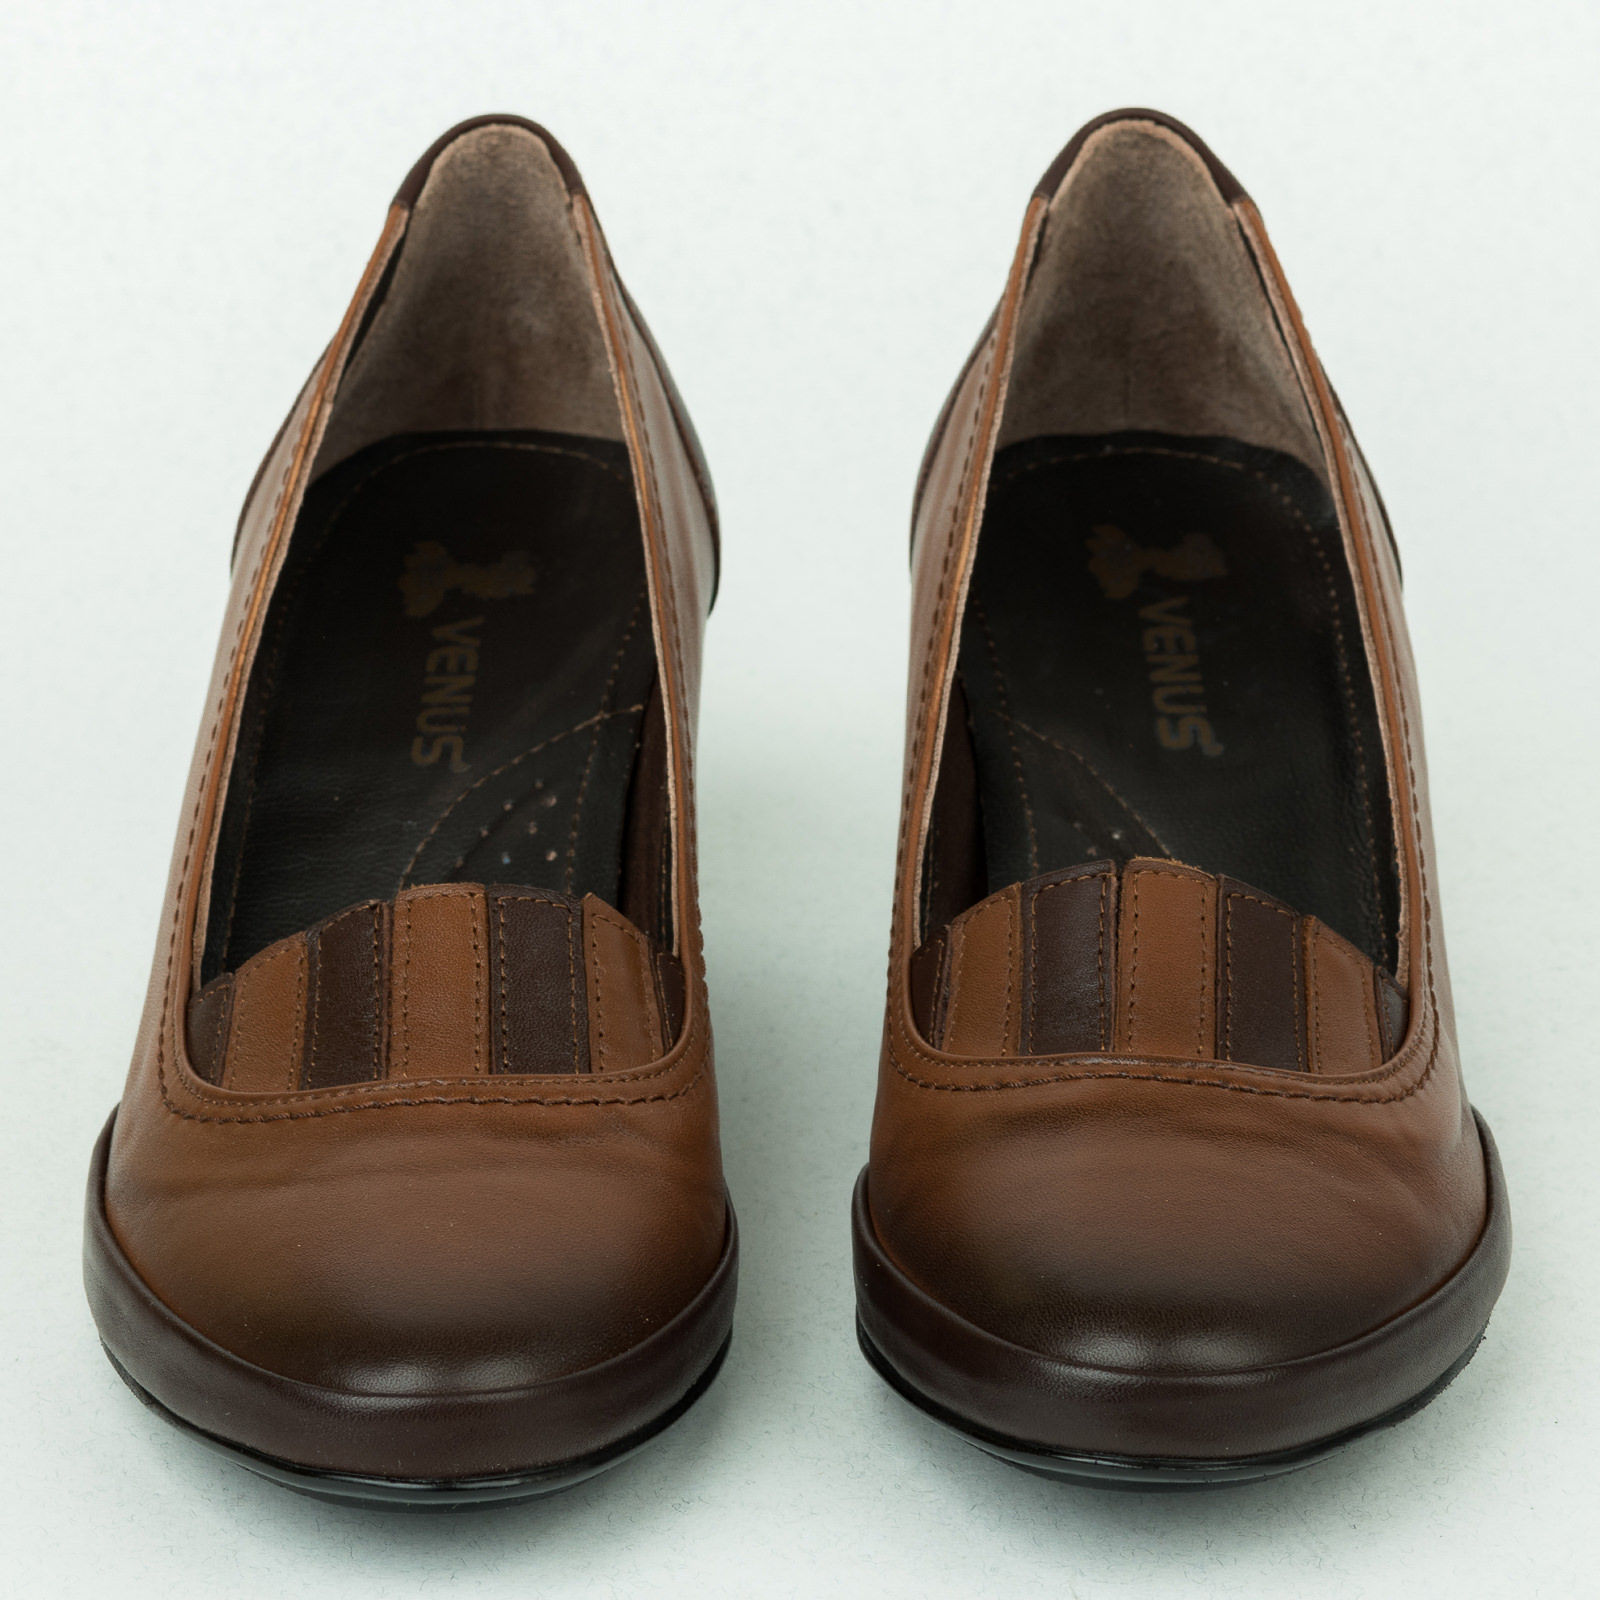 Leather high-heels B061 - CAMEL